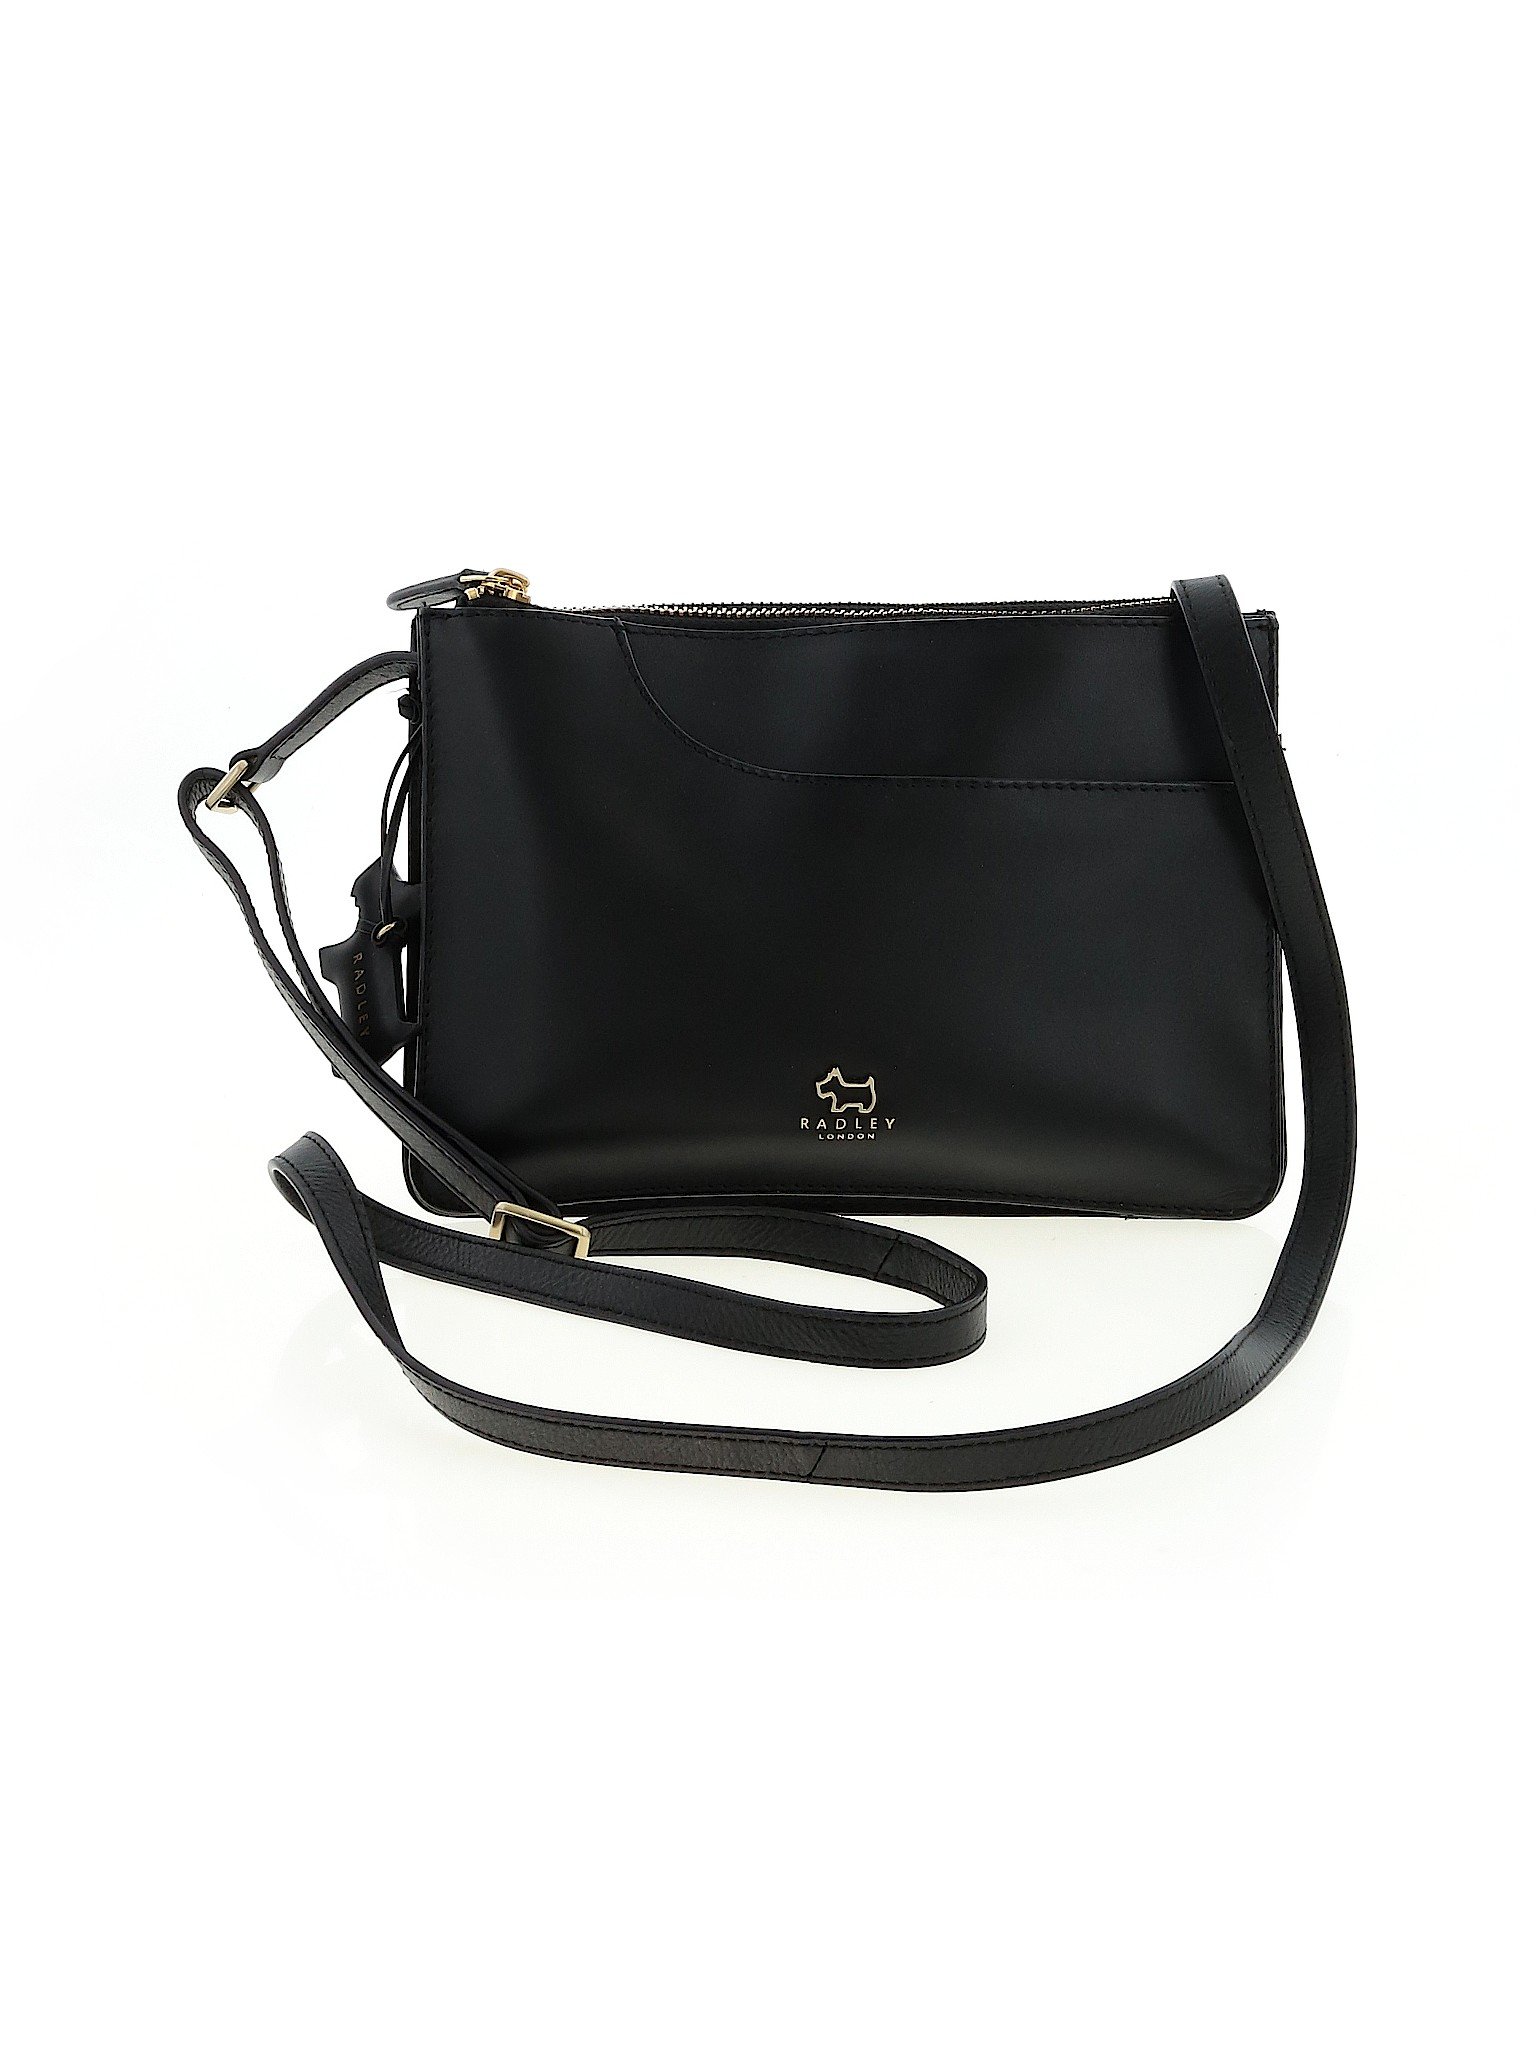 Radley London Solid Black Crossbody Bag One Size - 69% off | thredUP